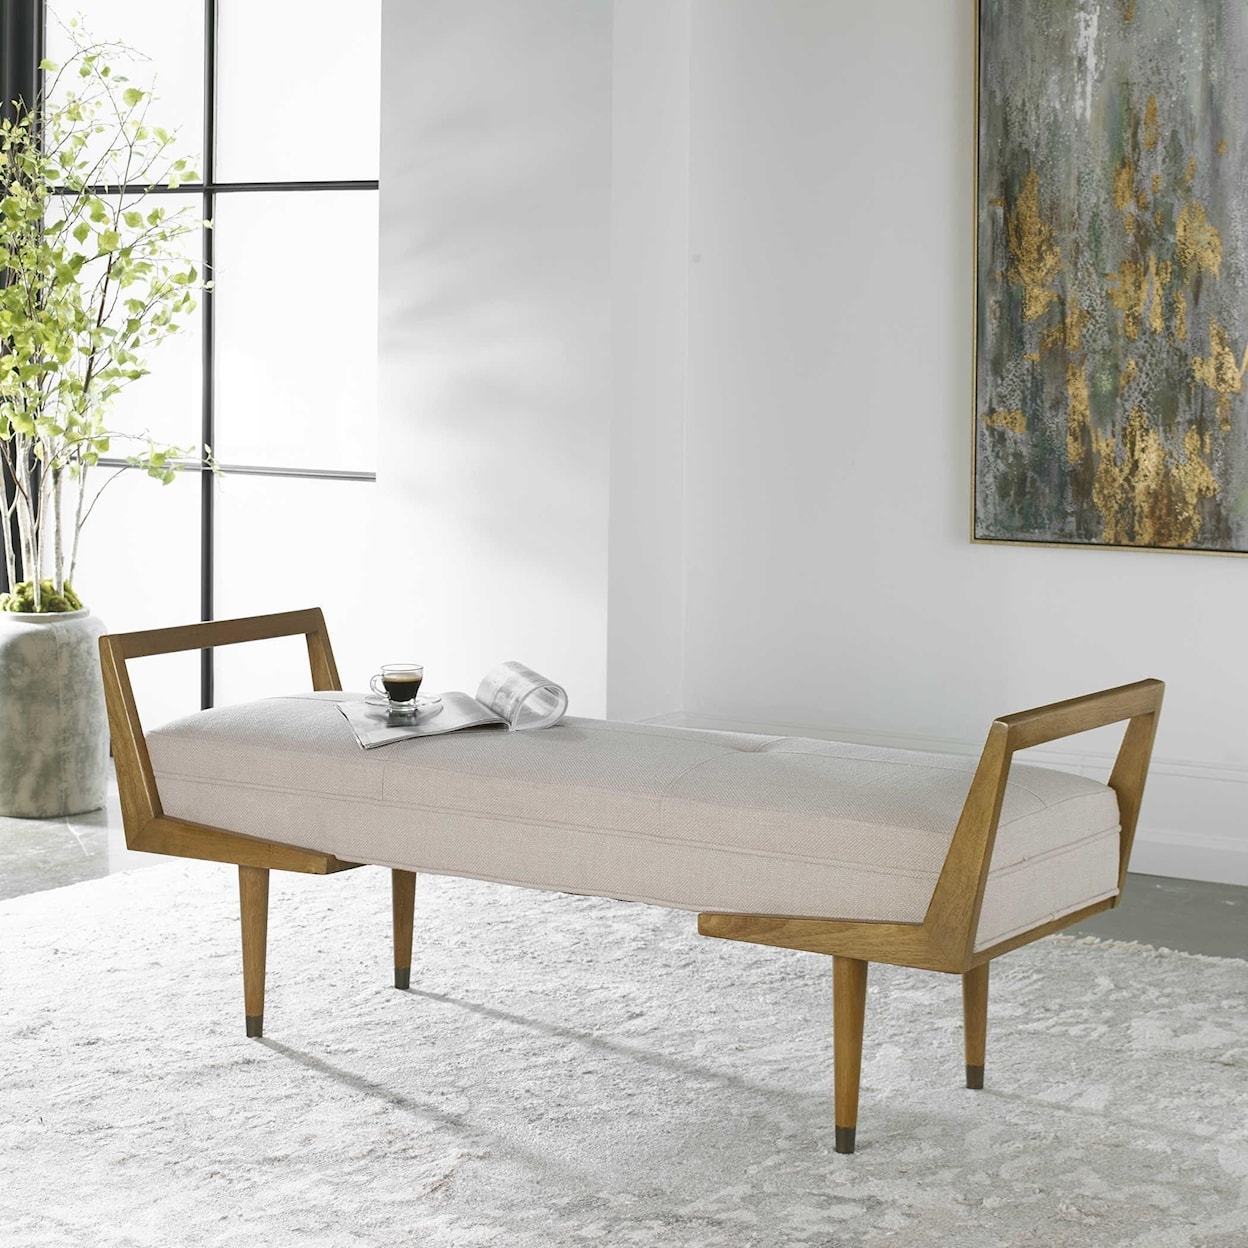 Uttermost Accent Furniture - Benches Waylon Modern Ivory Bench